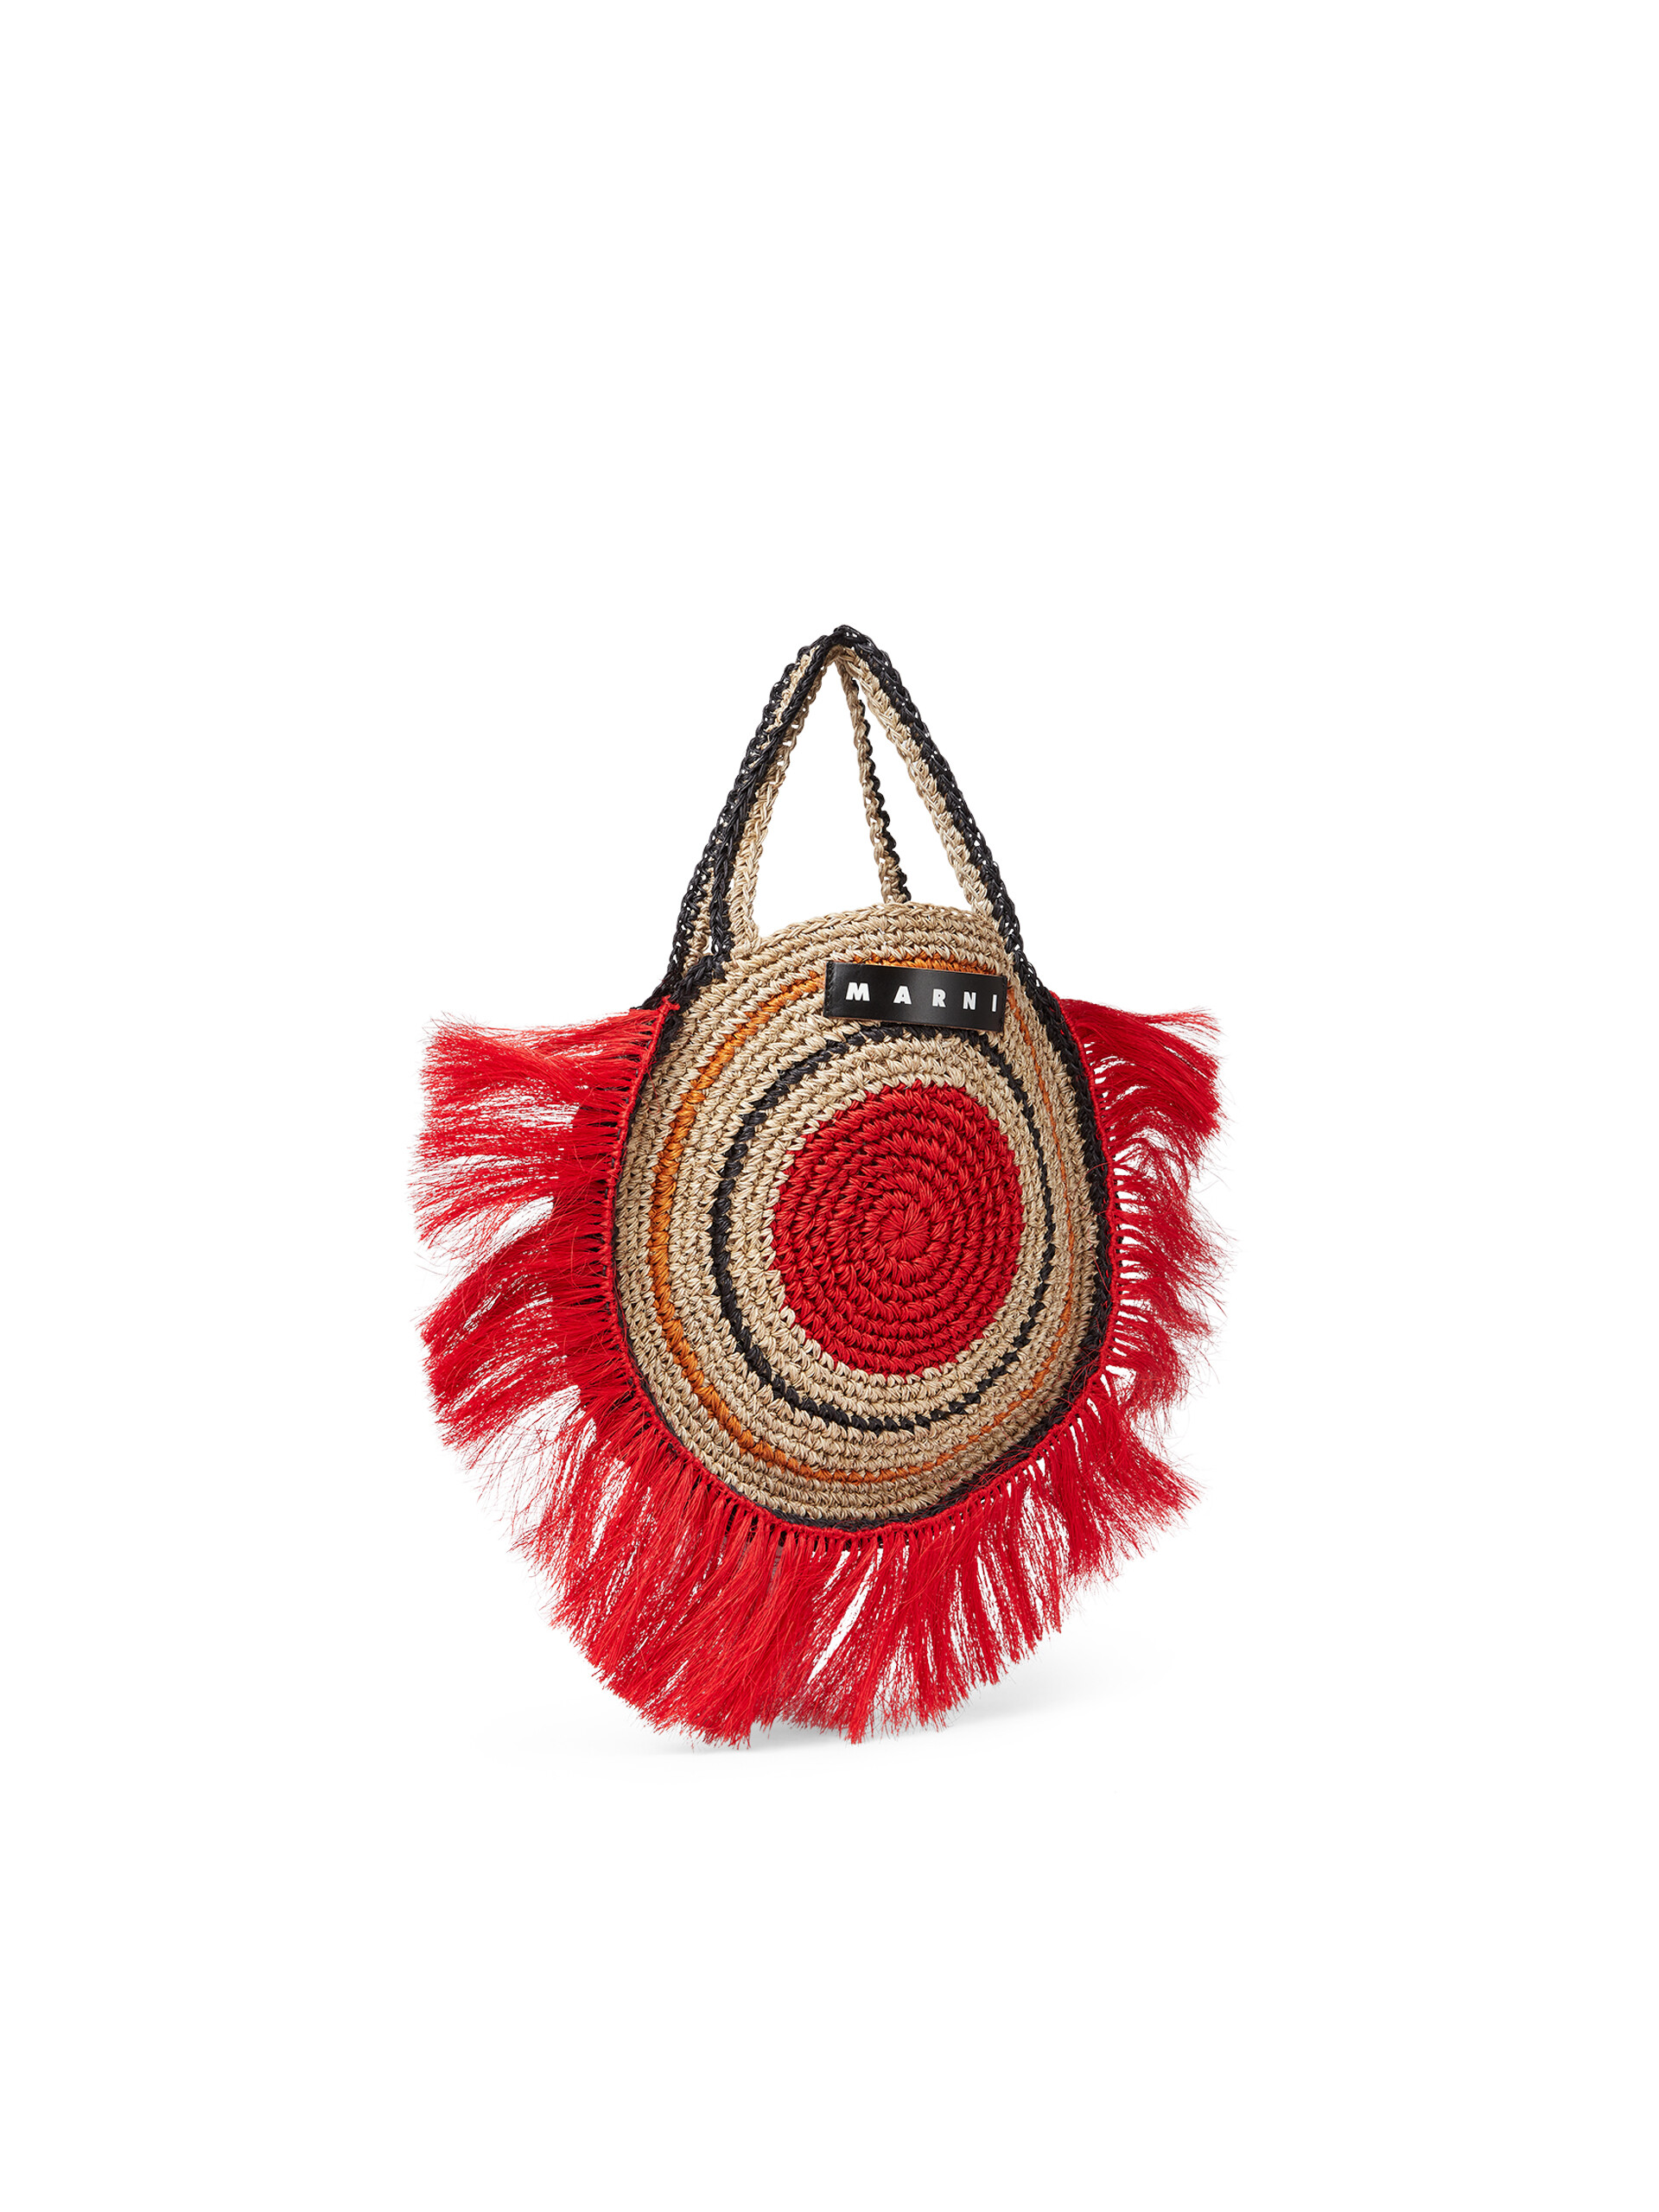 MARNI MARKET handbag in natural fibre with fringes - Bags - Image 2